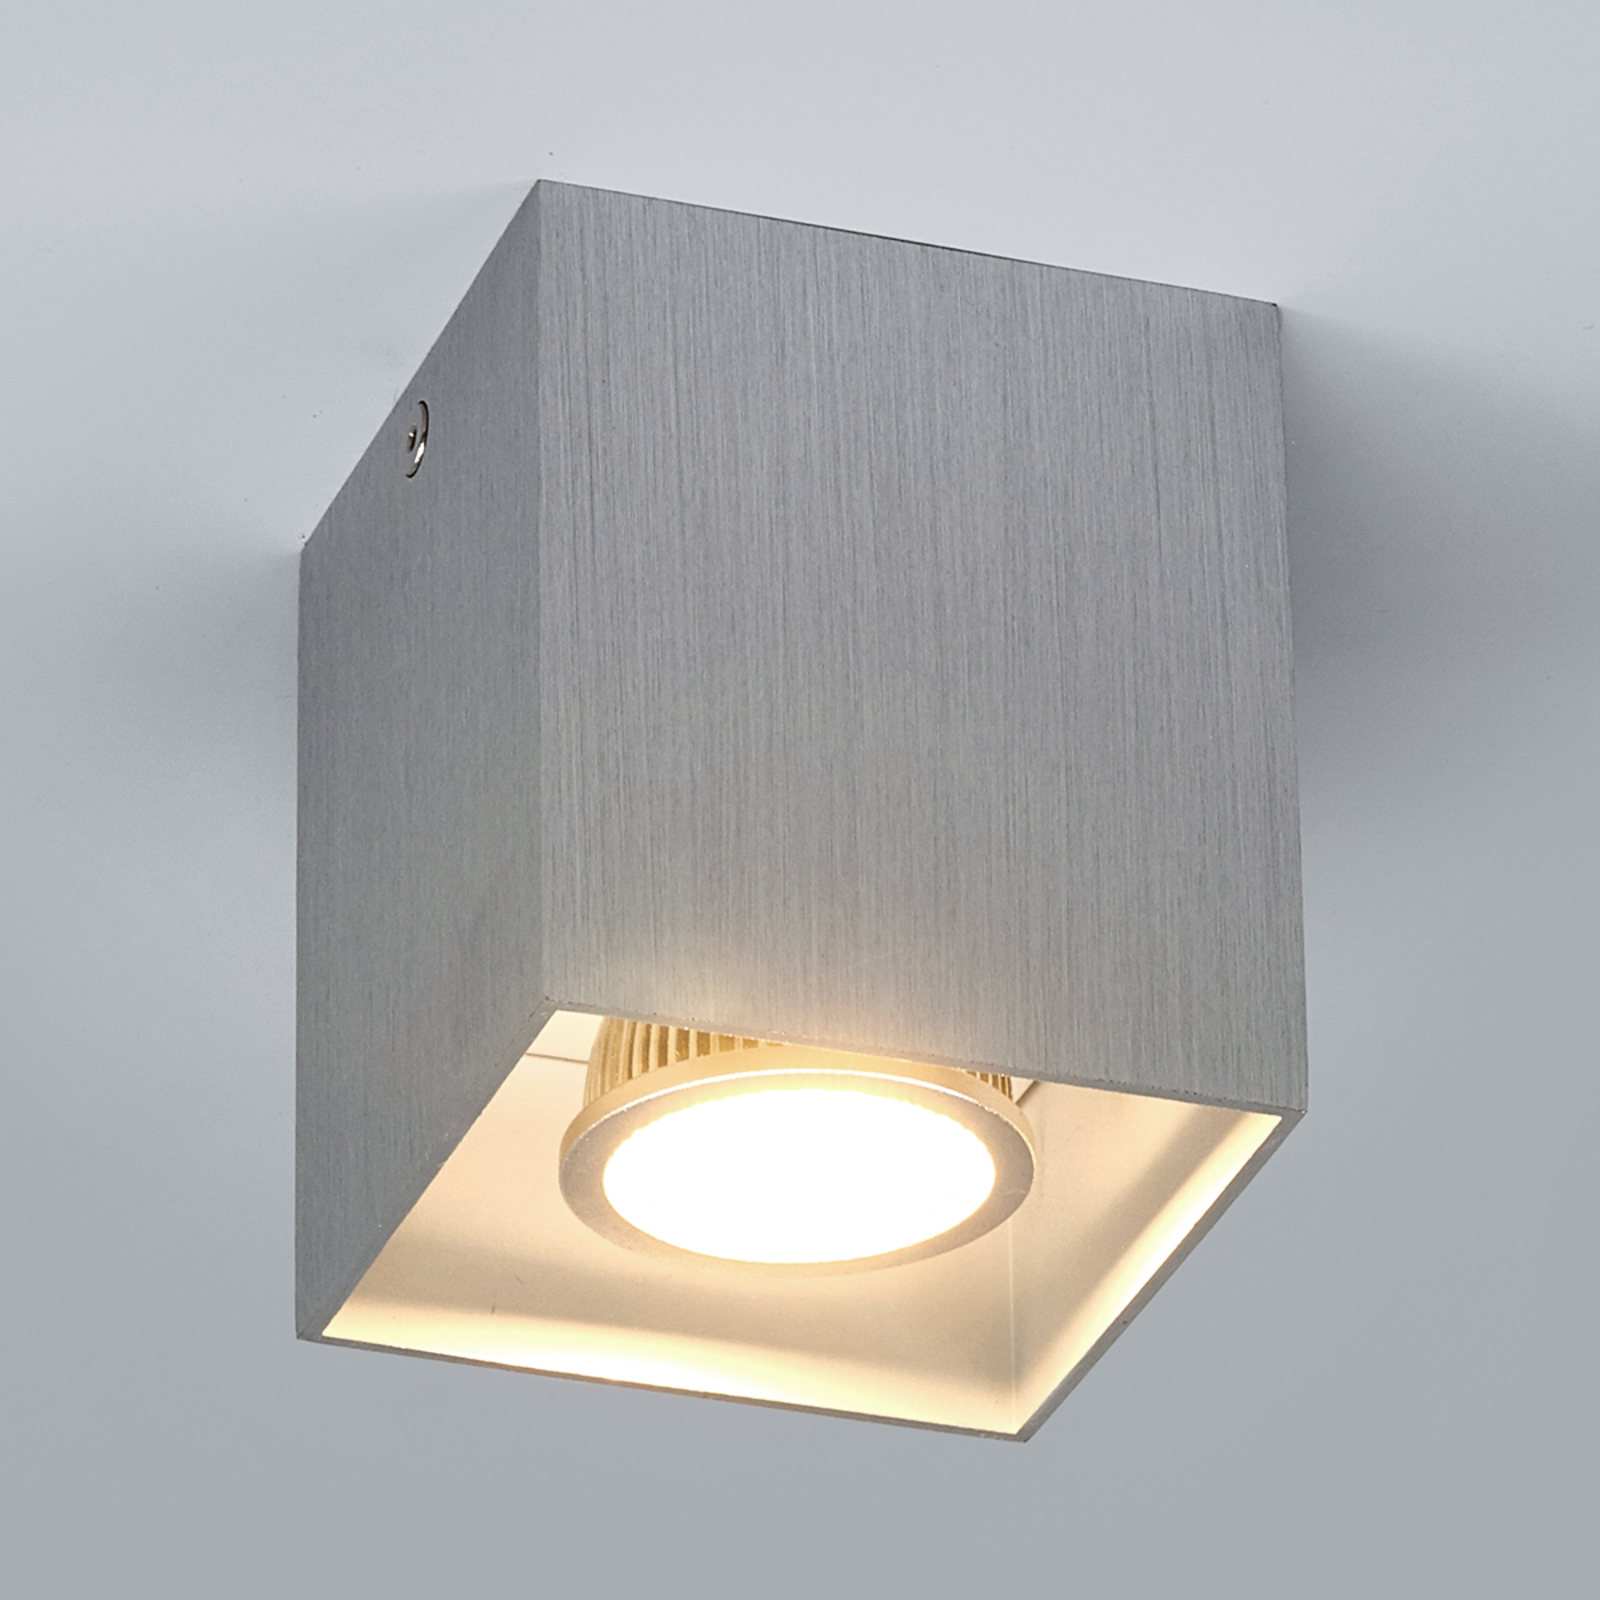 Sufitowa lampa natynkowa Carson, aluminium